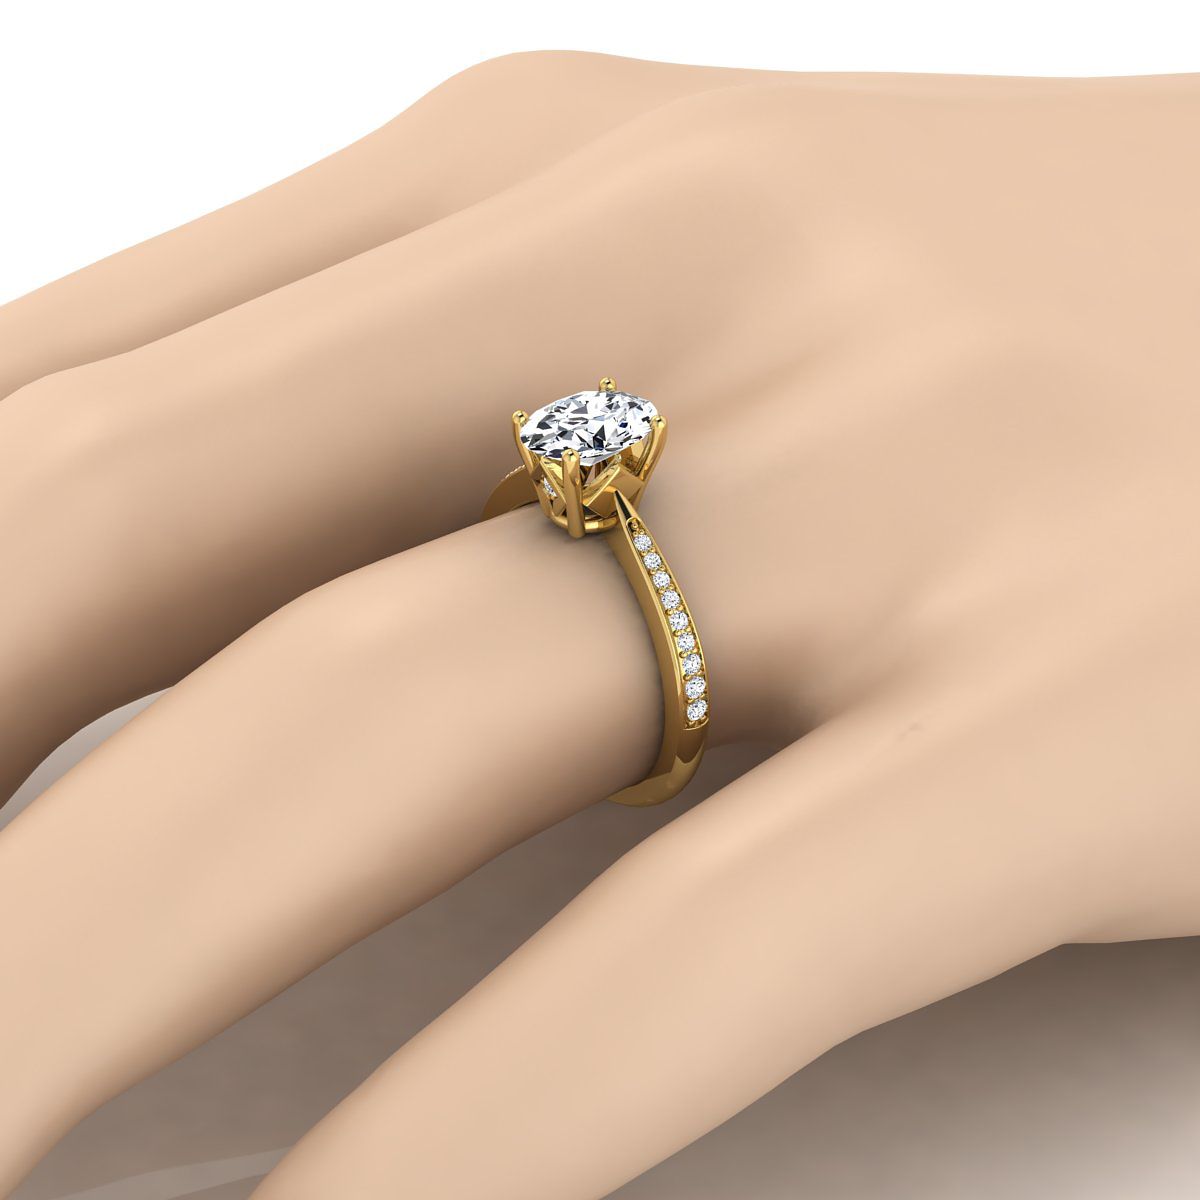 18K Yellow Gold Oval Aquamarine Tapered Pave Diamond Engagement Ring -1/8ctw